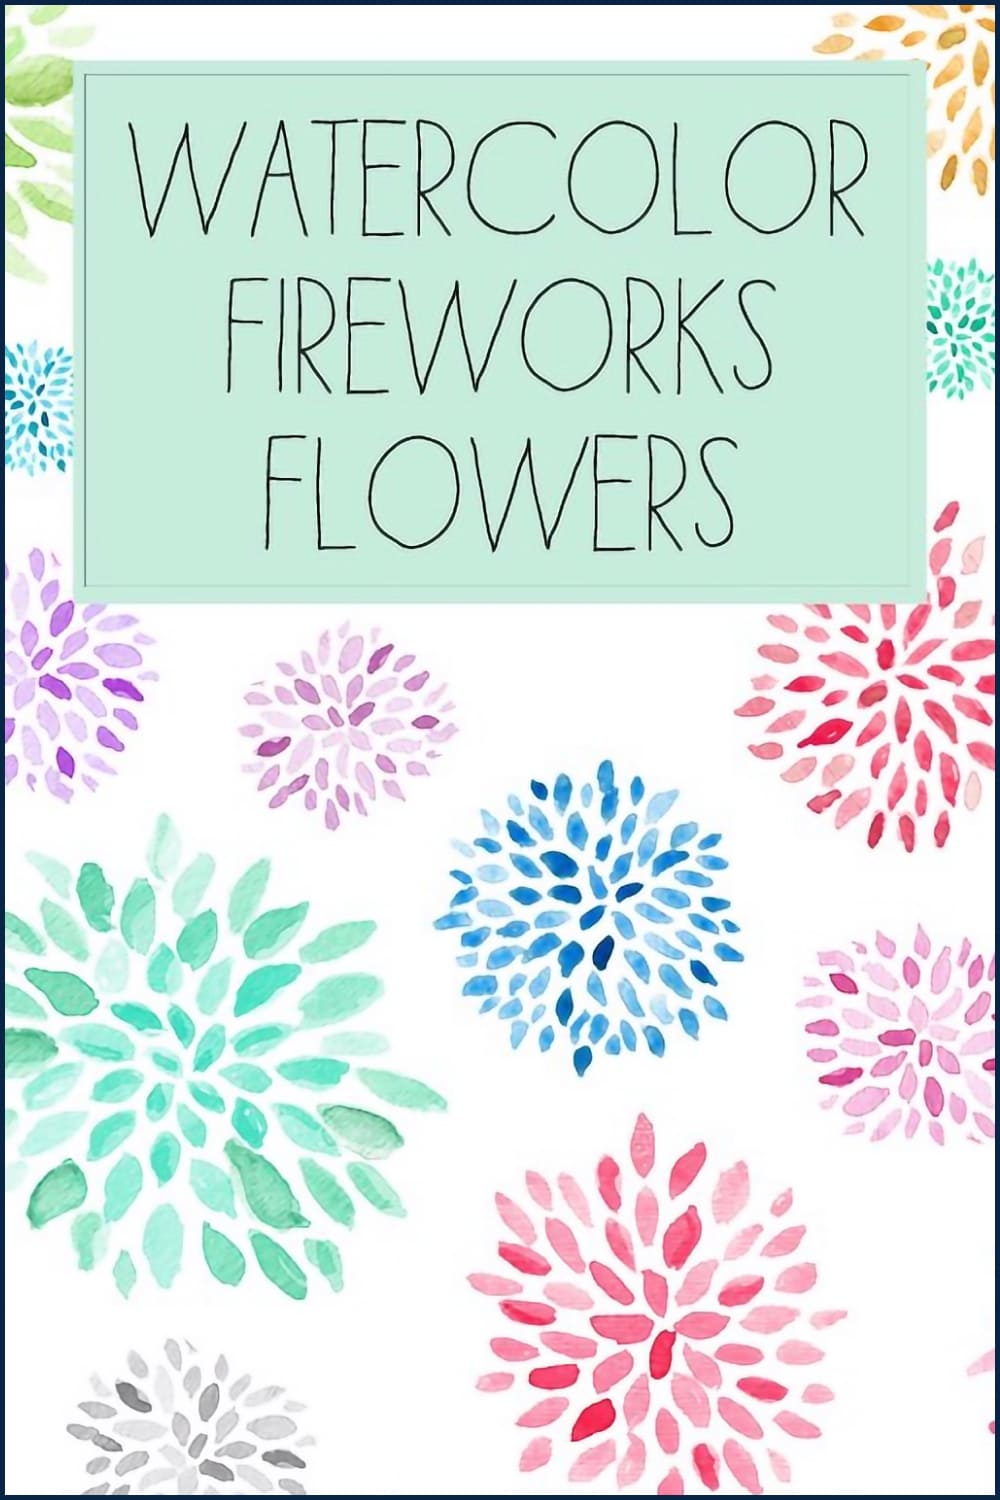 Fireworks Flowers - Pinterest.